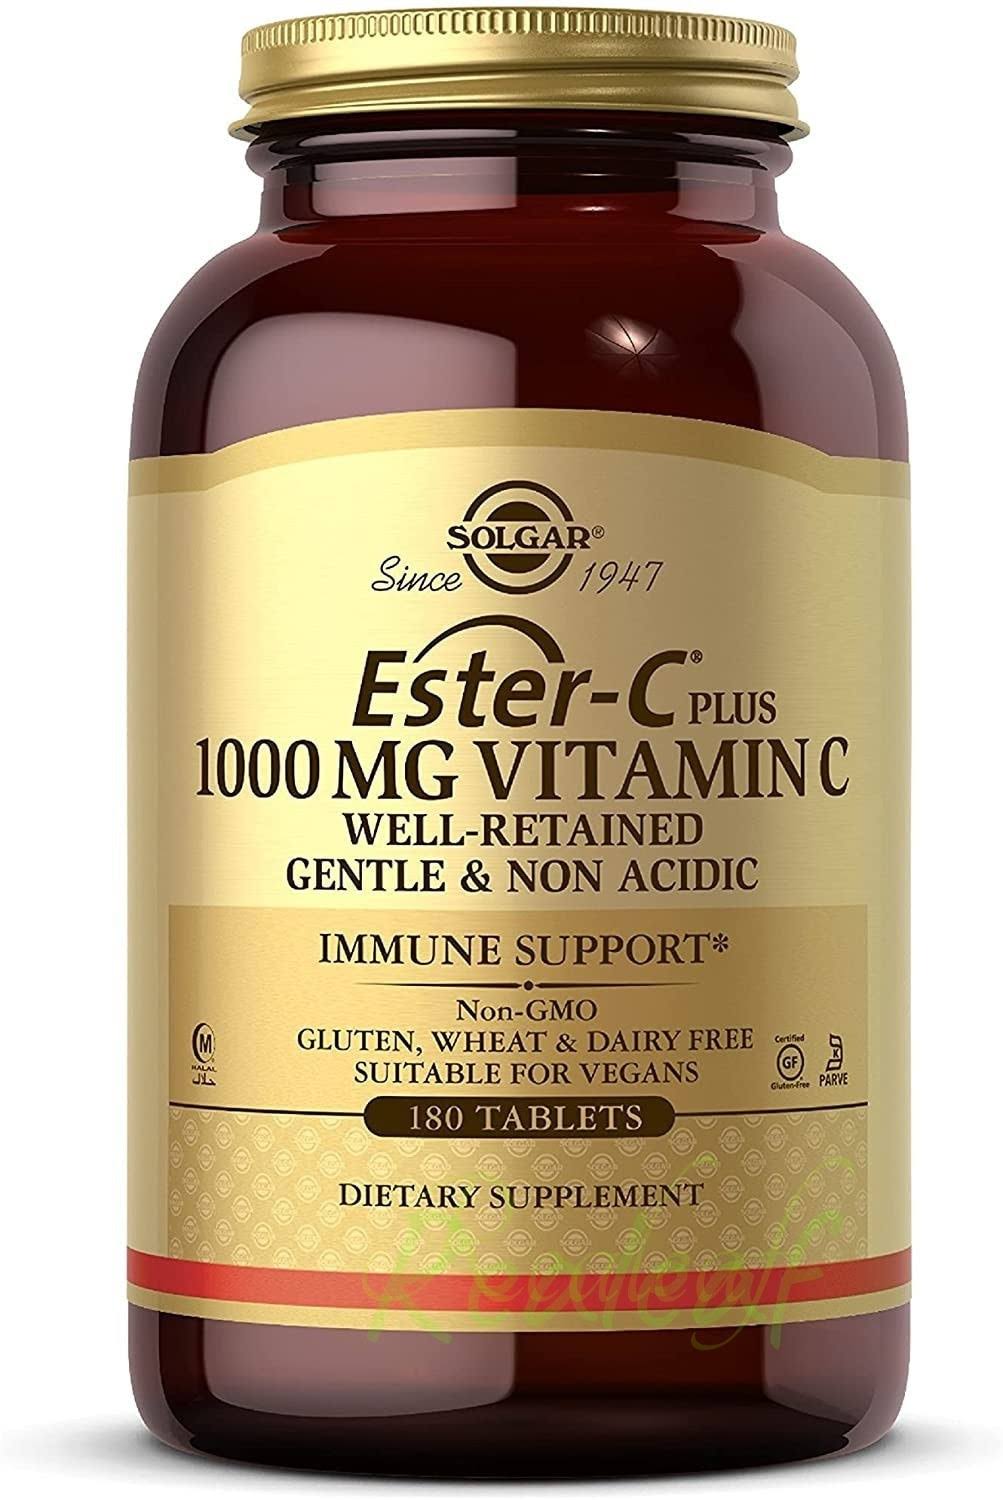 Solgar Ester-C Plus 1000mg Vitamin C